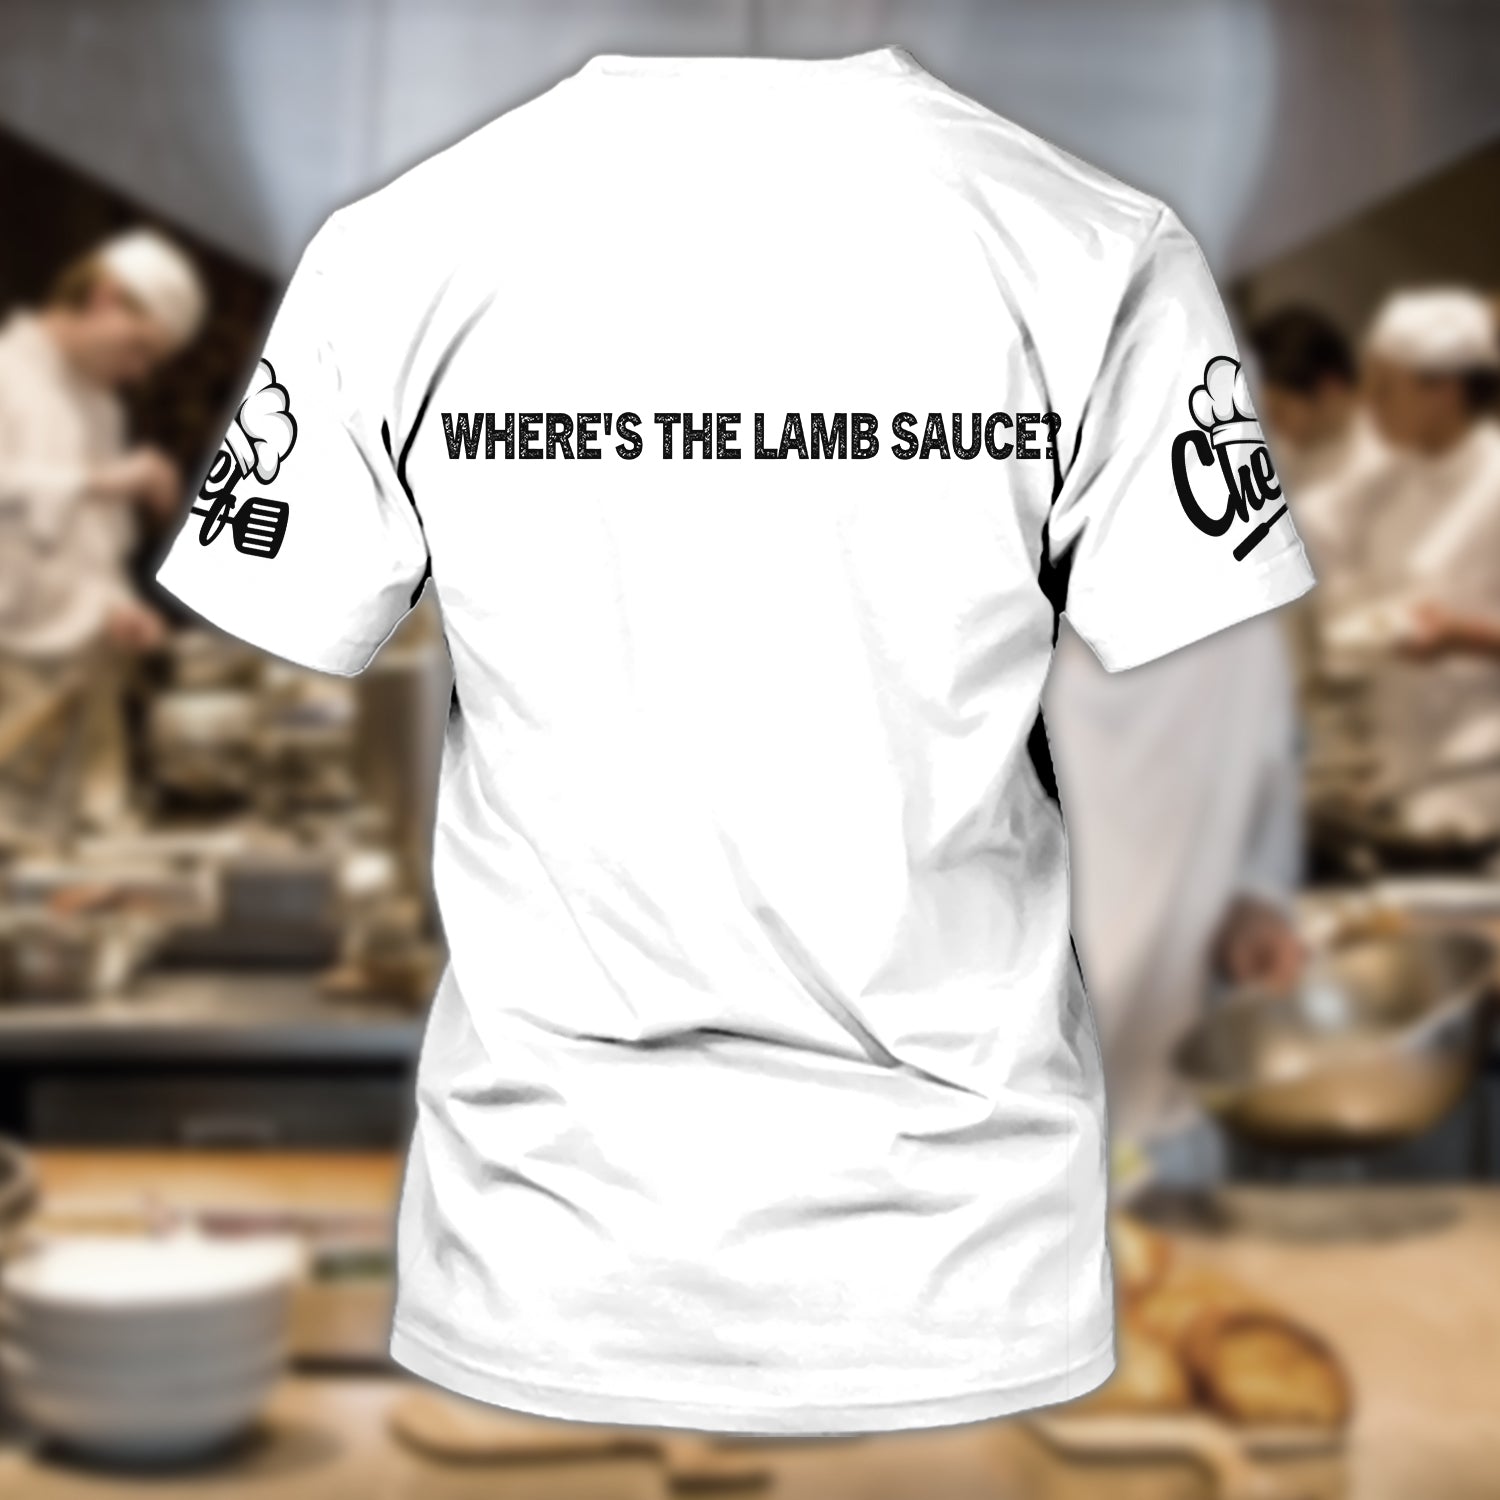 Chef, Personalized Name 3D Tshirt 114, HTA